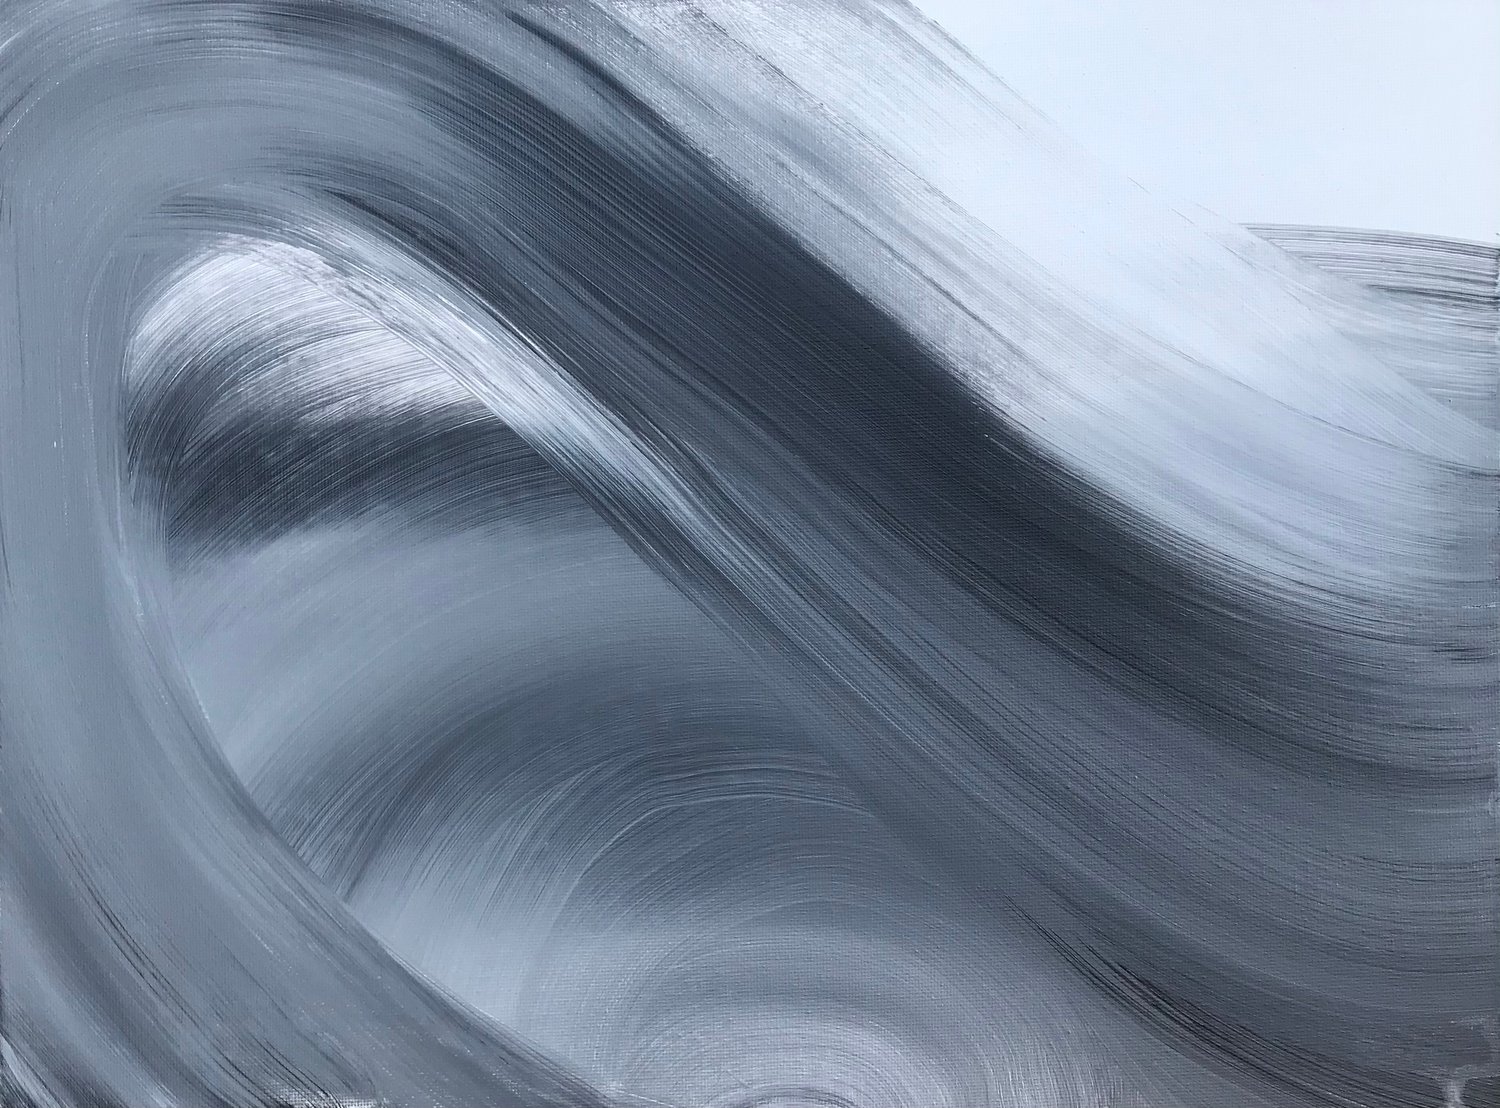 Monochrome Wave l. - acrylic on canvas board, 30x40 cm